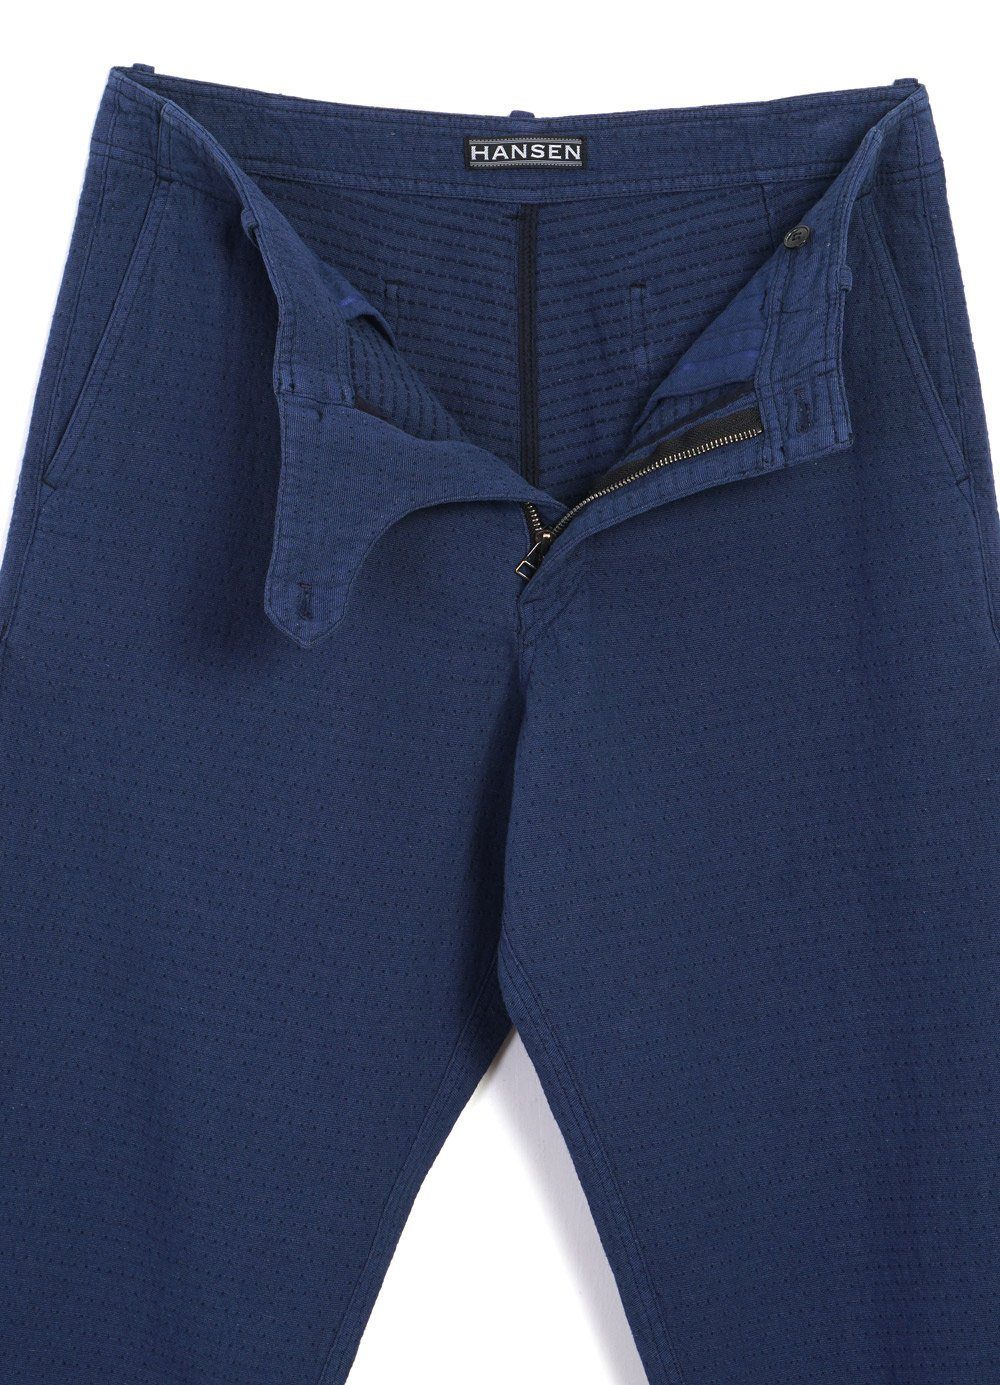 HANSEN GARMENTS - TRYGVE | Wide Cut Cropped Trousers | Blue - HANSEN Garments